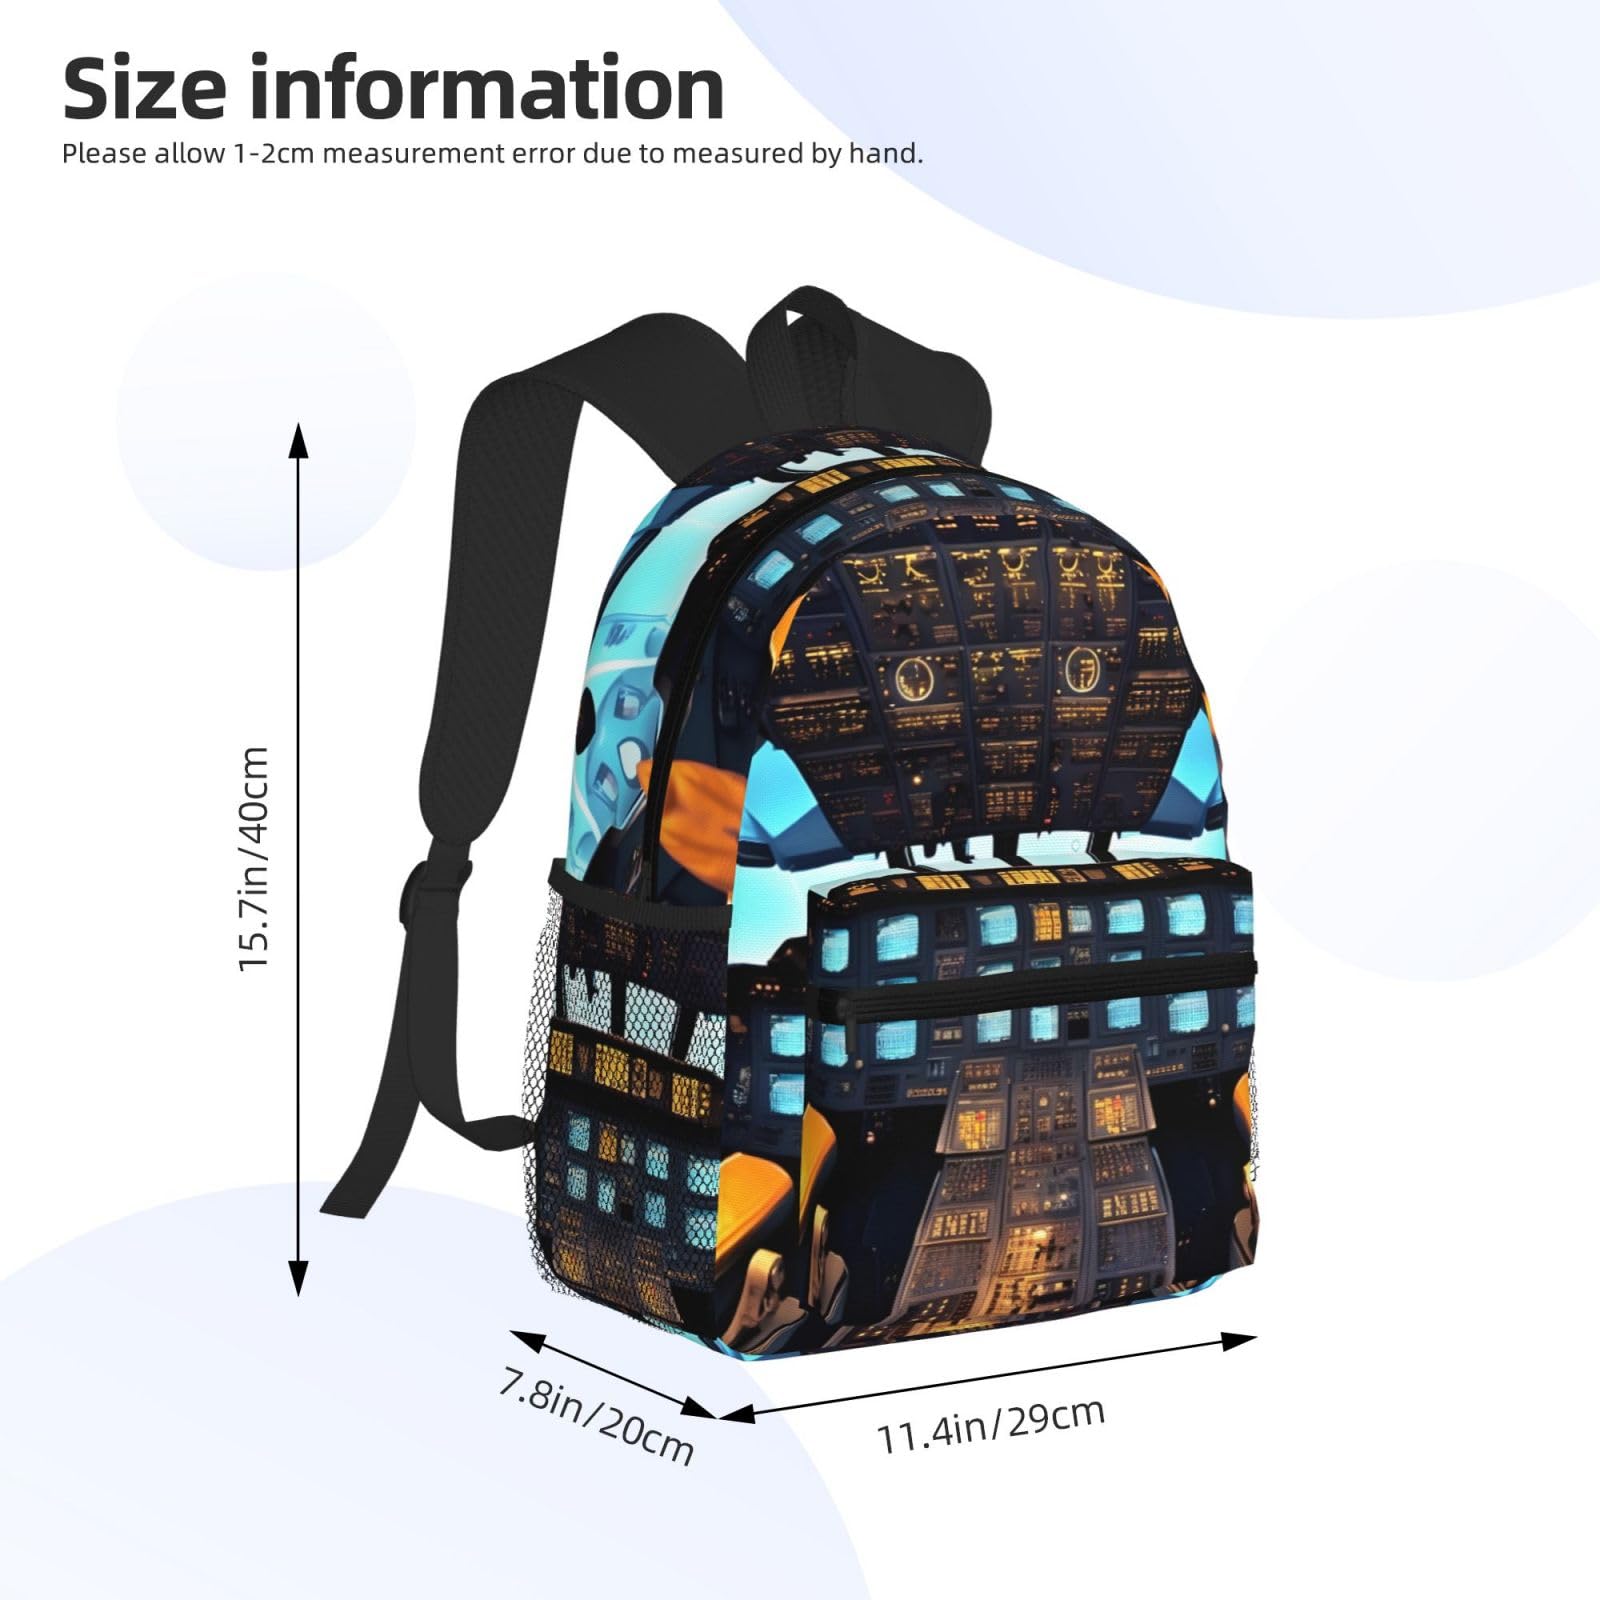 OdDdot Airplane Cockpit Backpacks Lightweight Bookbag Front Utility Pocket with Built-in Organizer - Premium Backpack